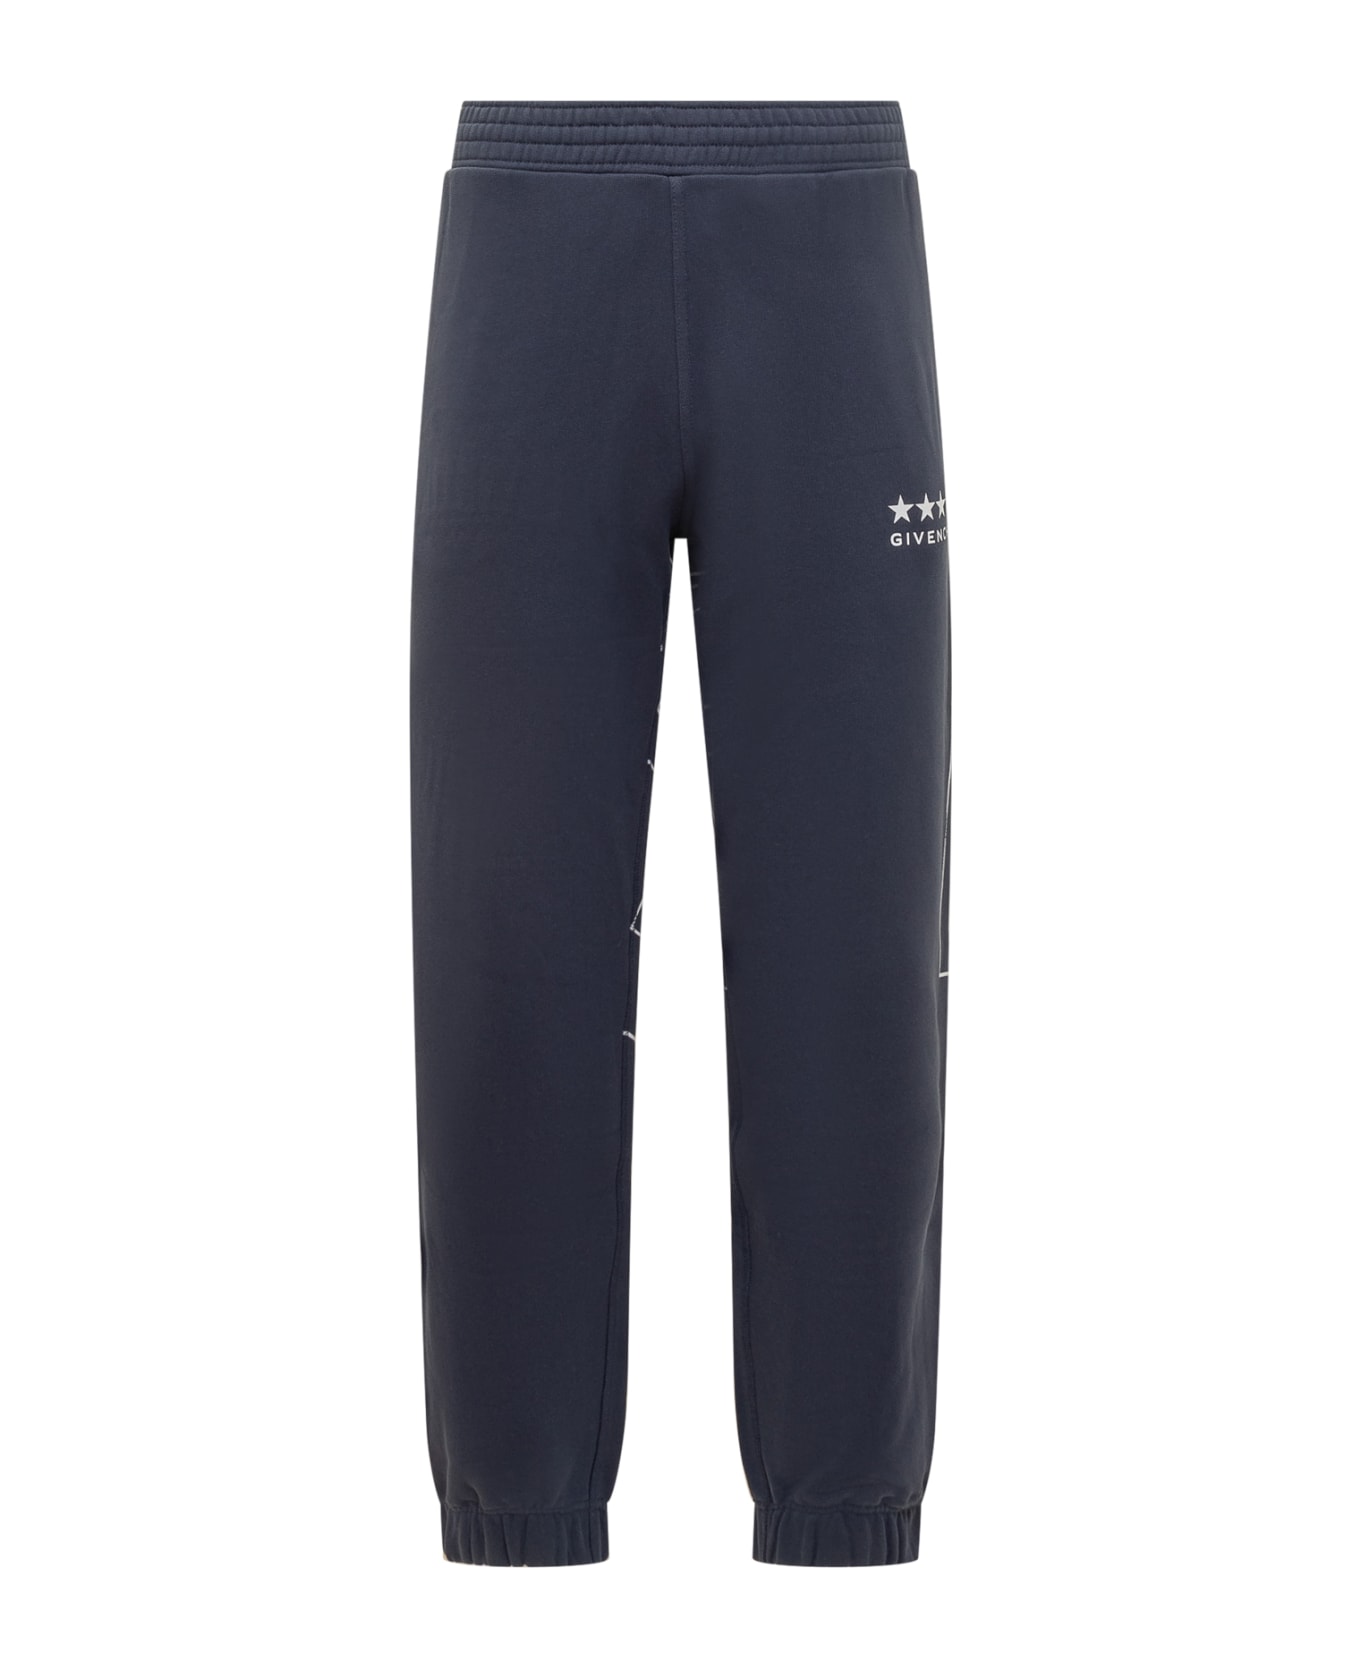 Givenchy Jogging Pants - DEEP BLUE